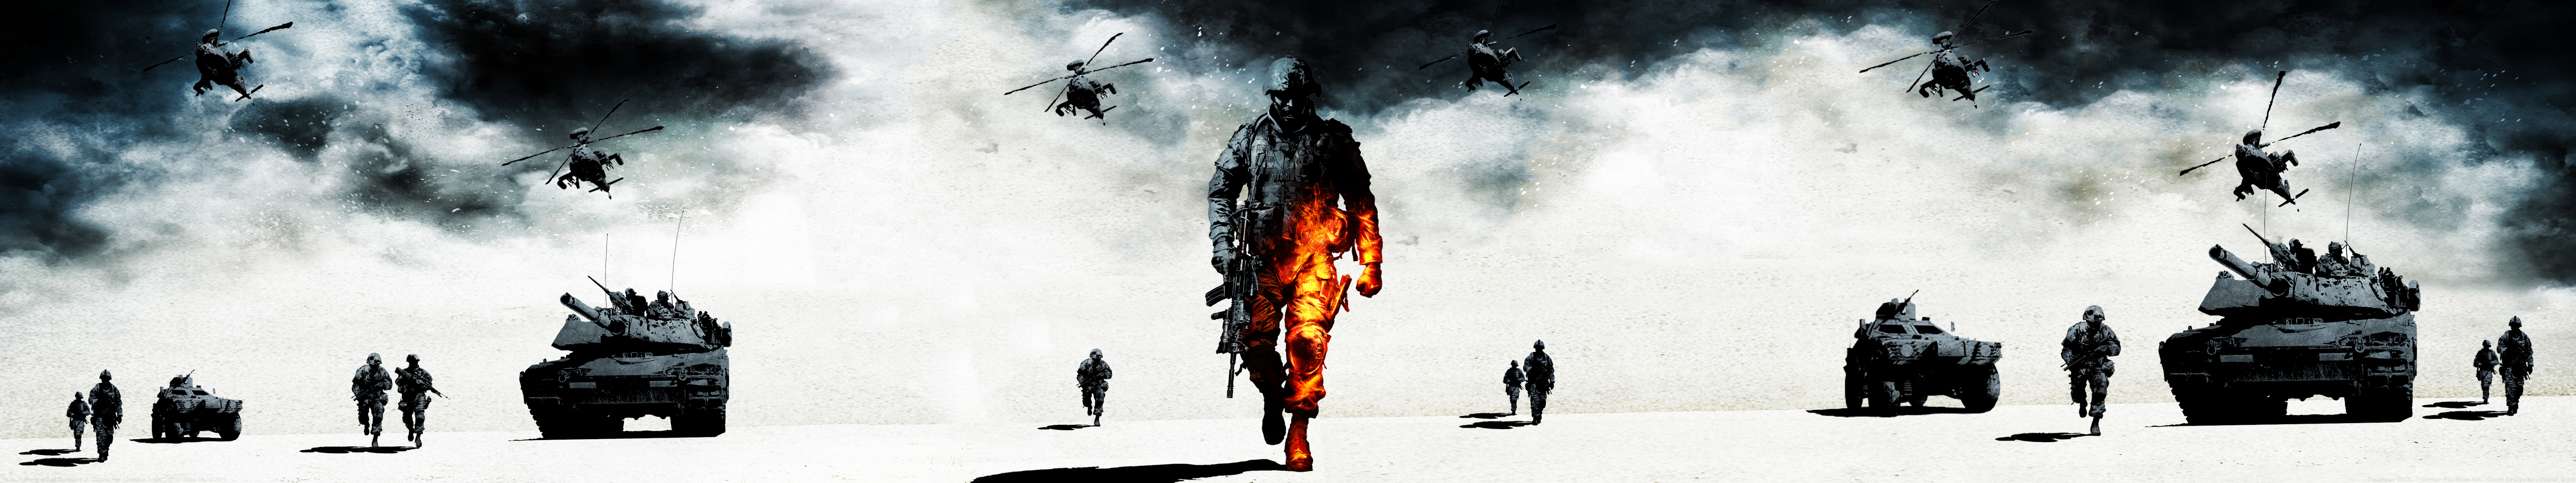 Télécharger des fonds d'écran Battlefield: Bad Company 2 HD